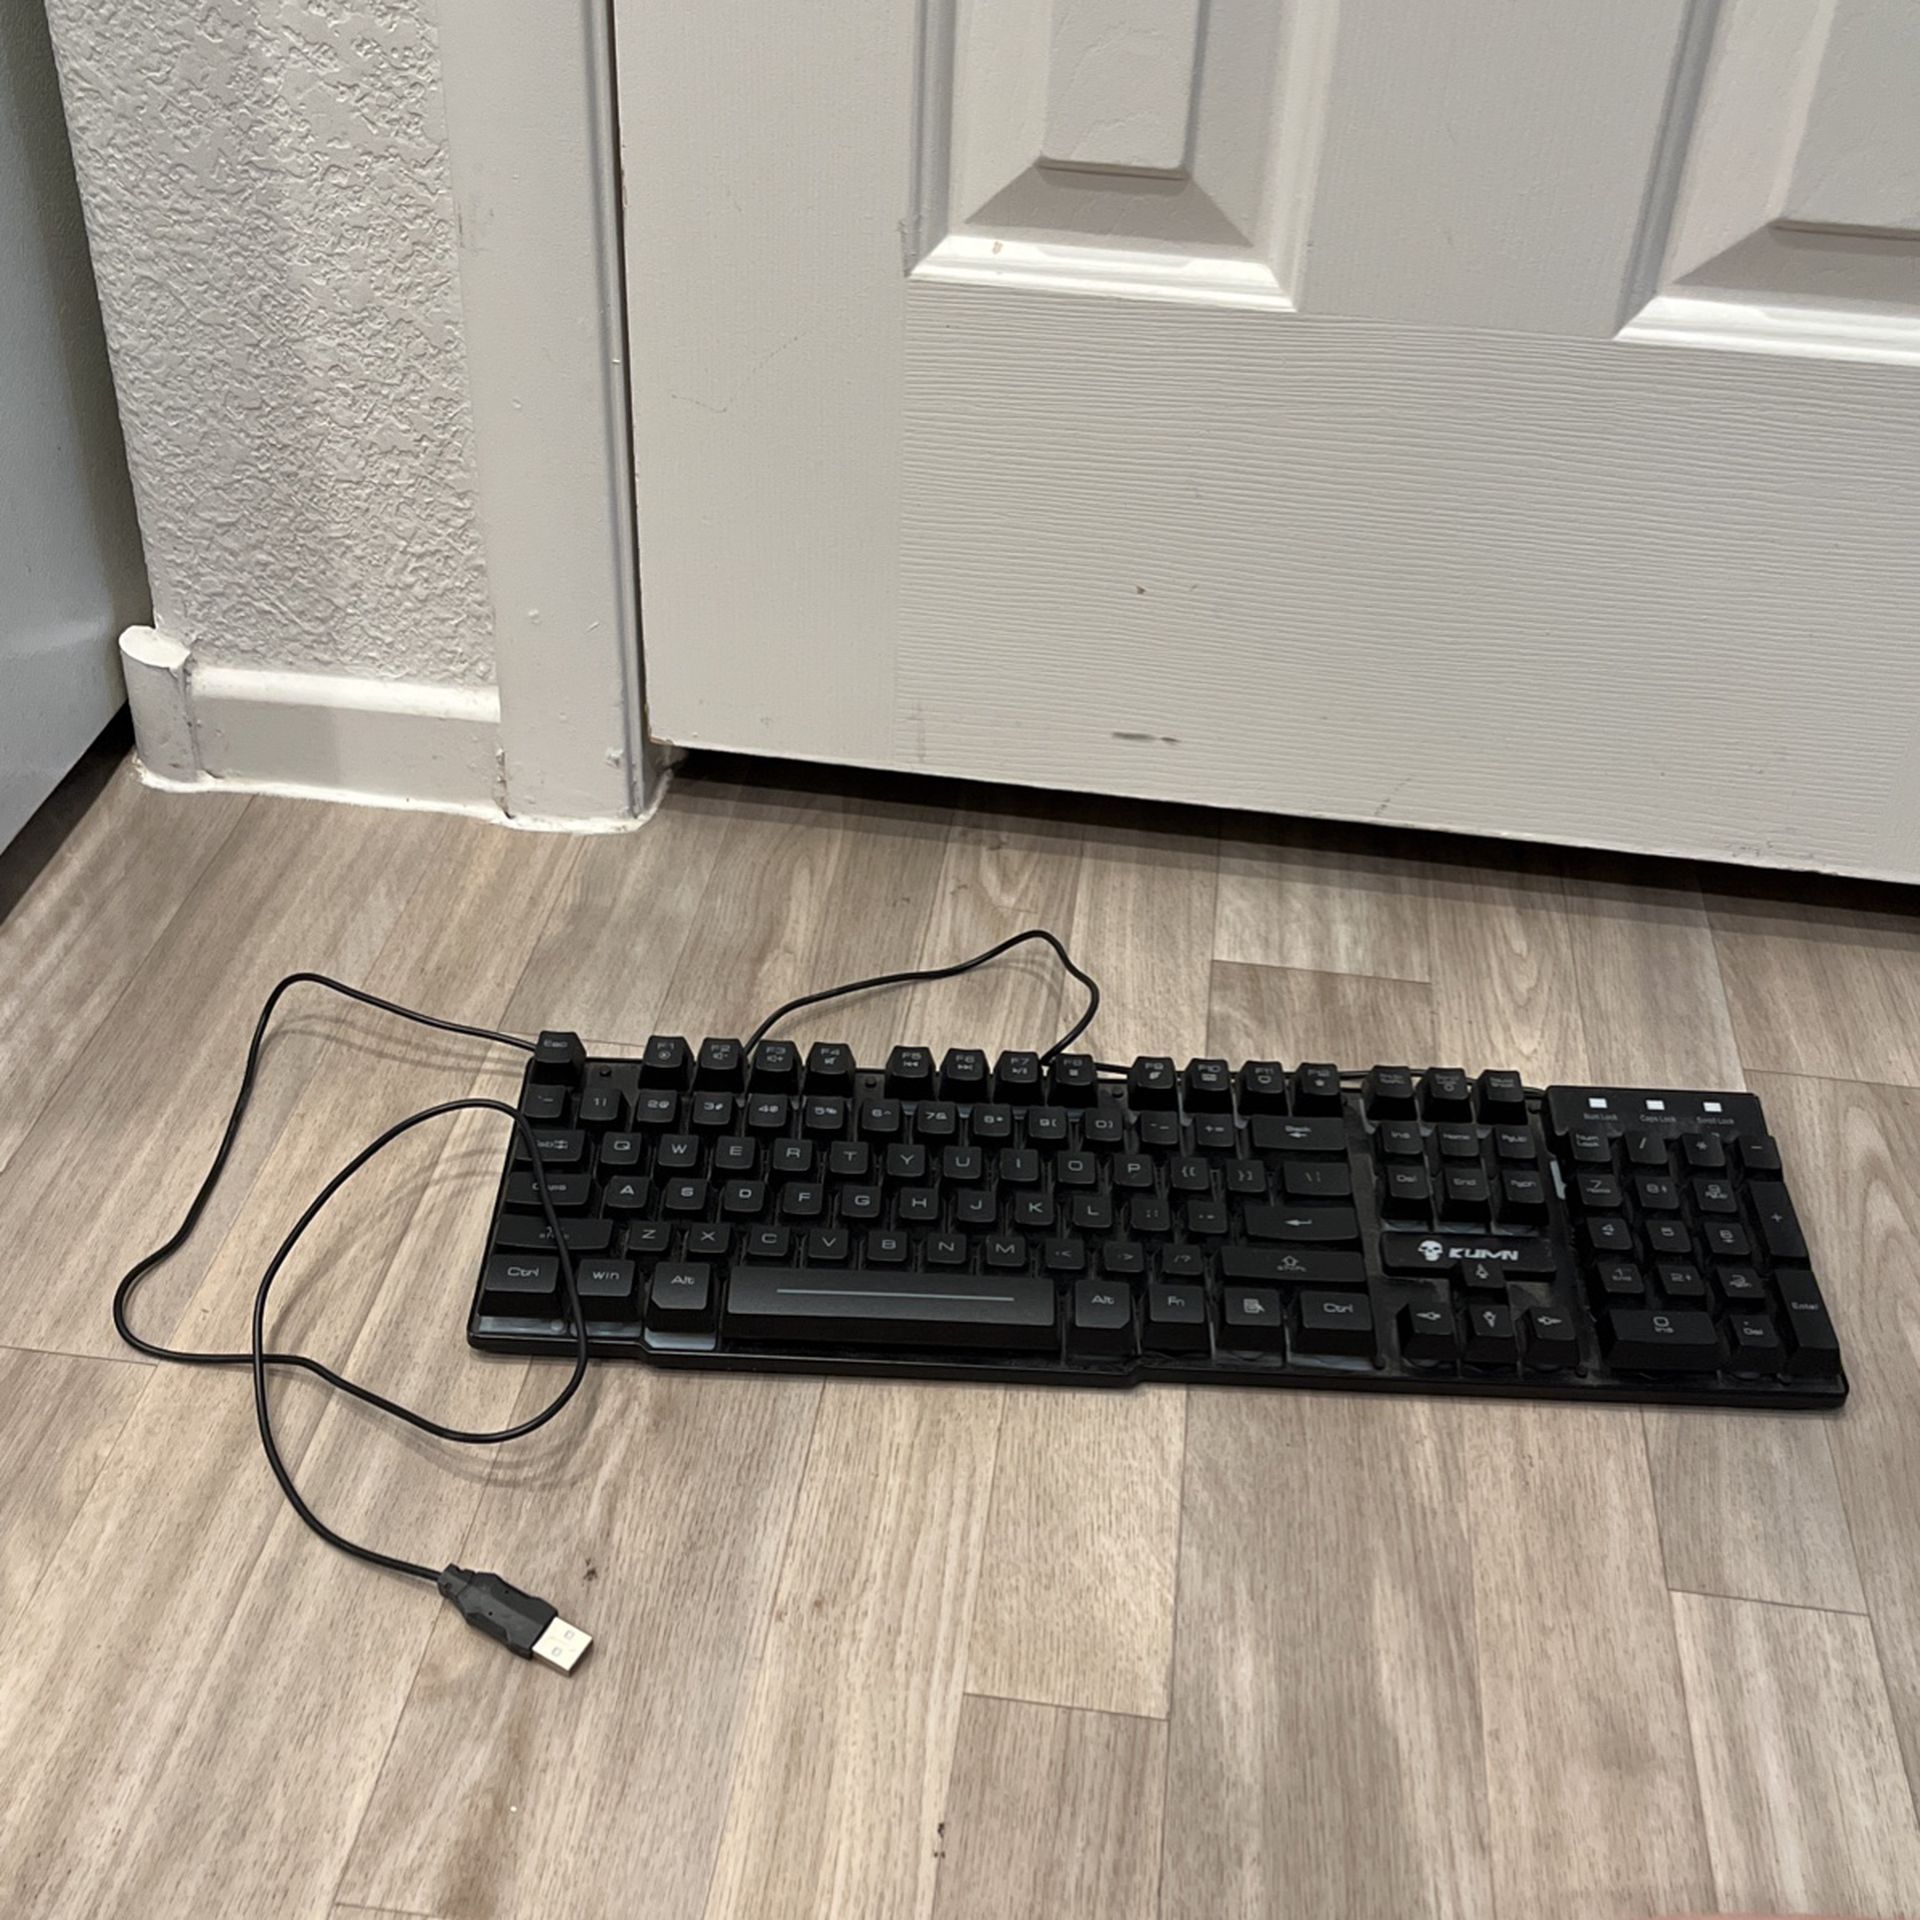 Kuiyn Keyboard 